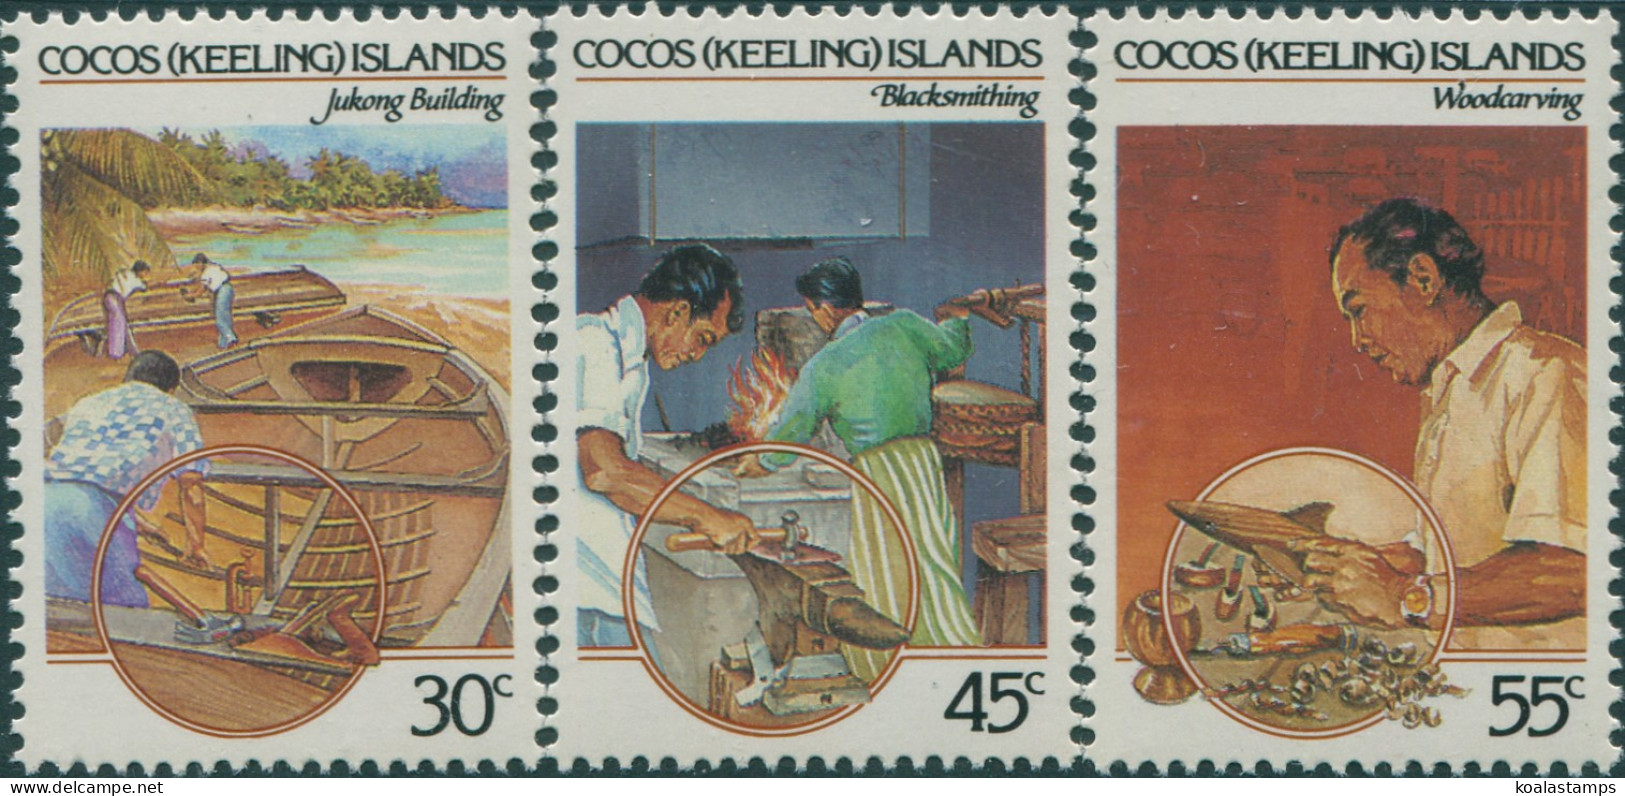 Cocos Islands 1985 SG126-128 Malay Culture Set MNH - Kokosinseln (Keeling Islands)